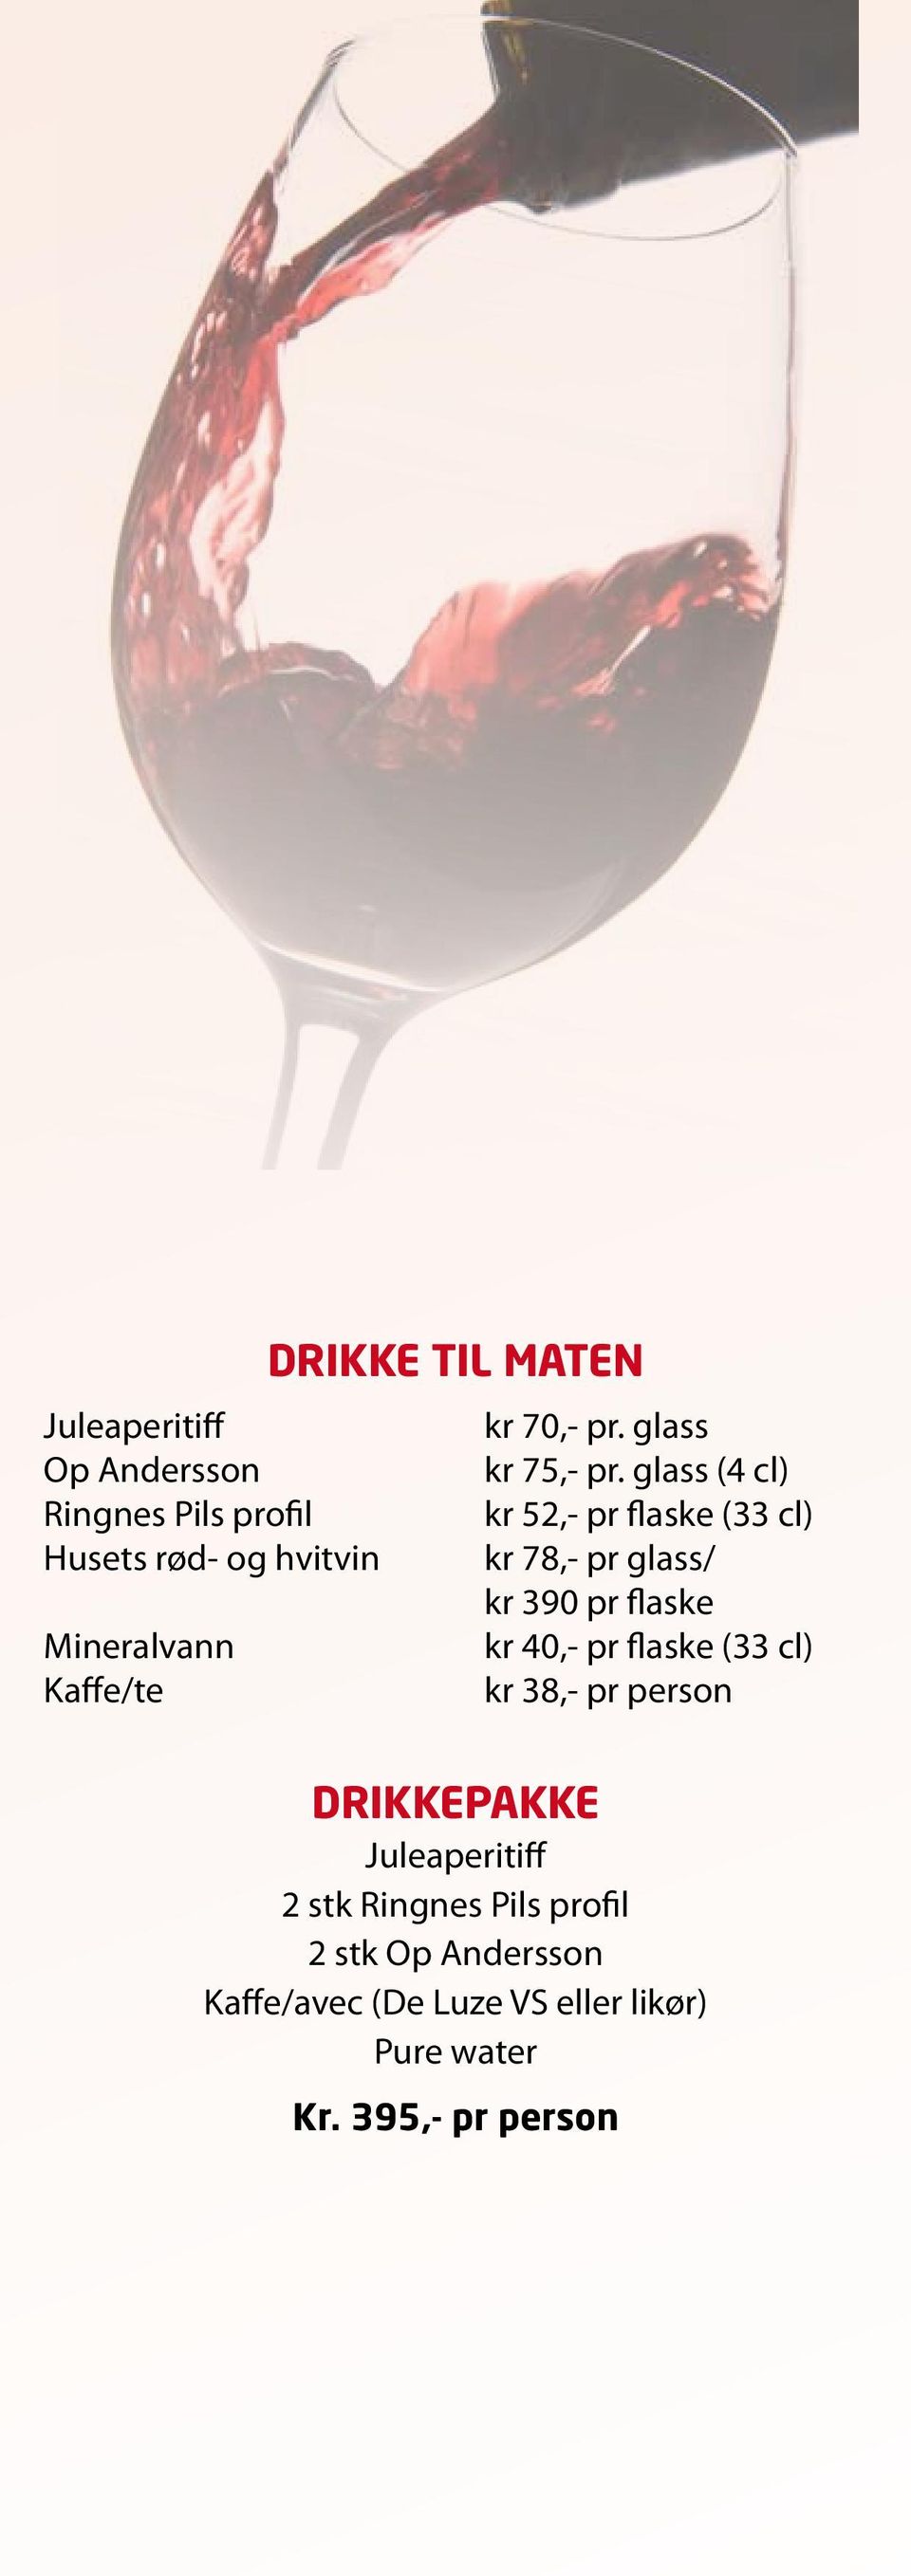 glass/ kr 390 pr flaske Mineralvann kr 40,- pr flaske (33 cl) Kaffe/te kr 38,- pr person